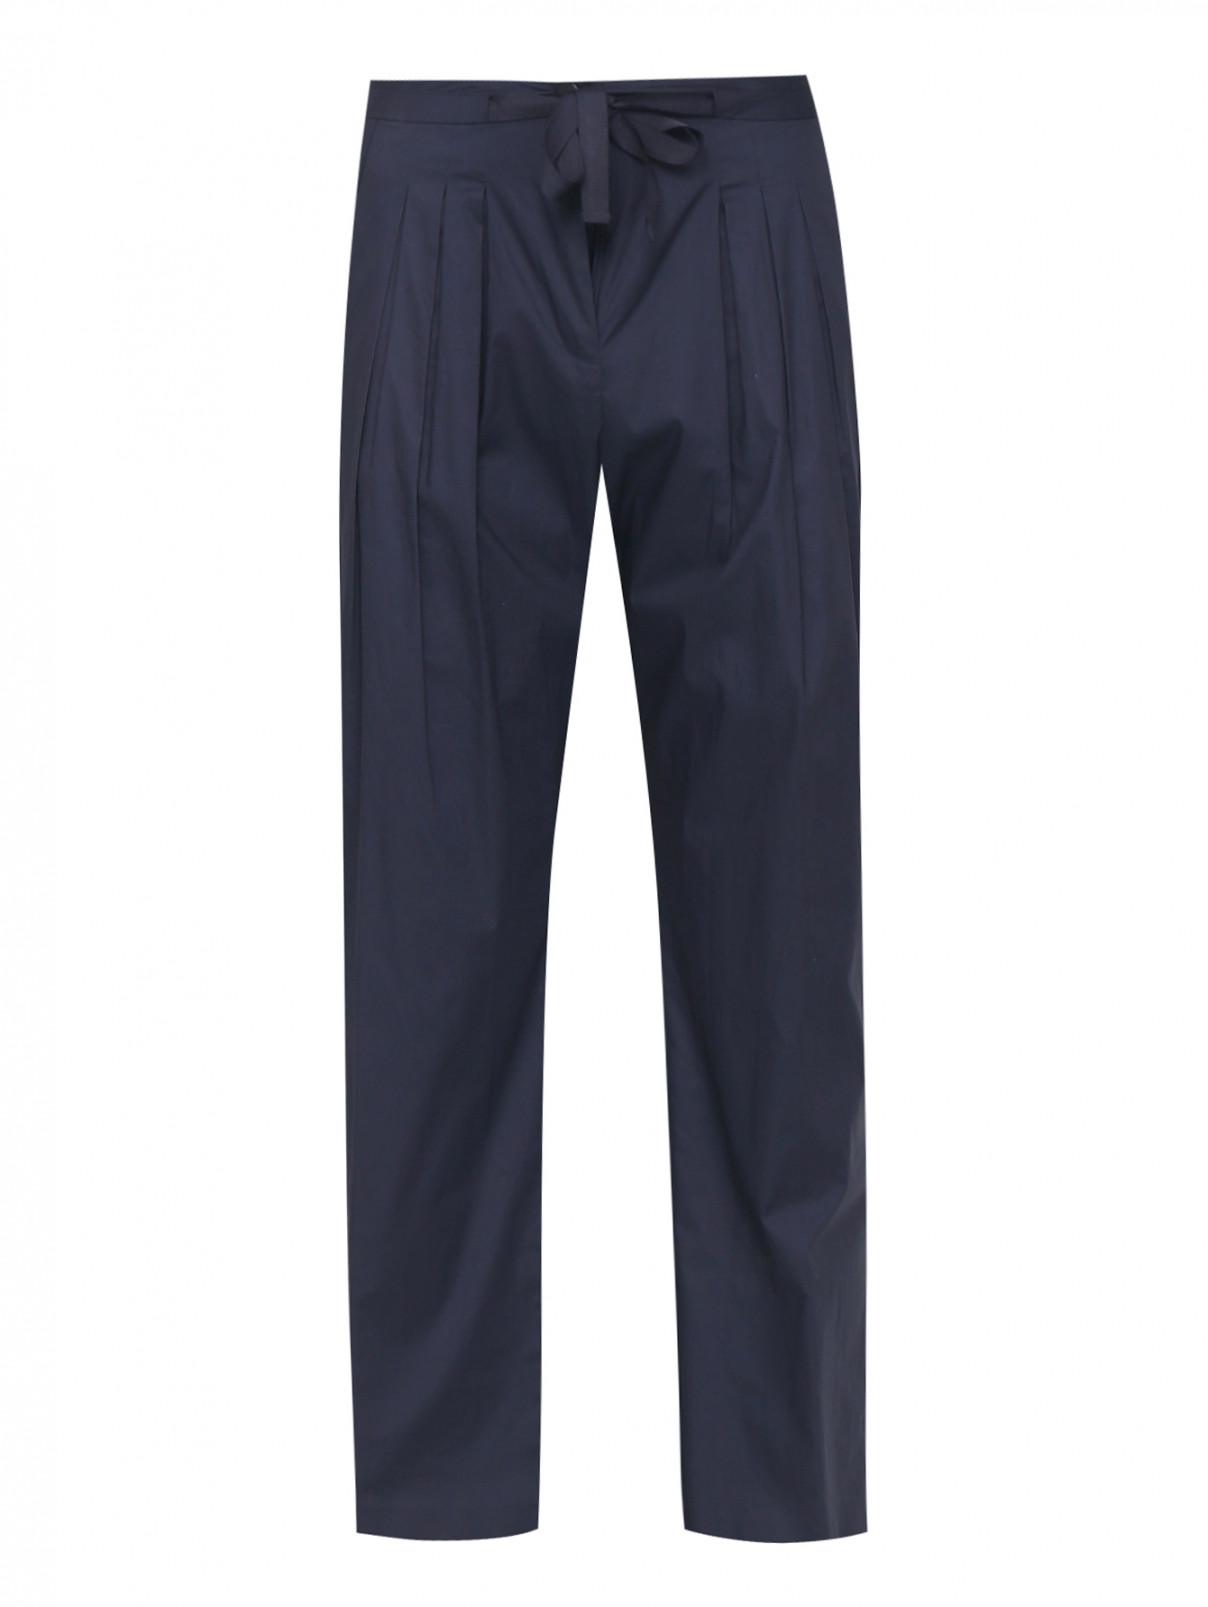 Брюки прямого кроя из хлопка Armani Jeans  –  Общий вид  – Цвет:  Синий